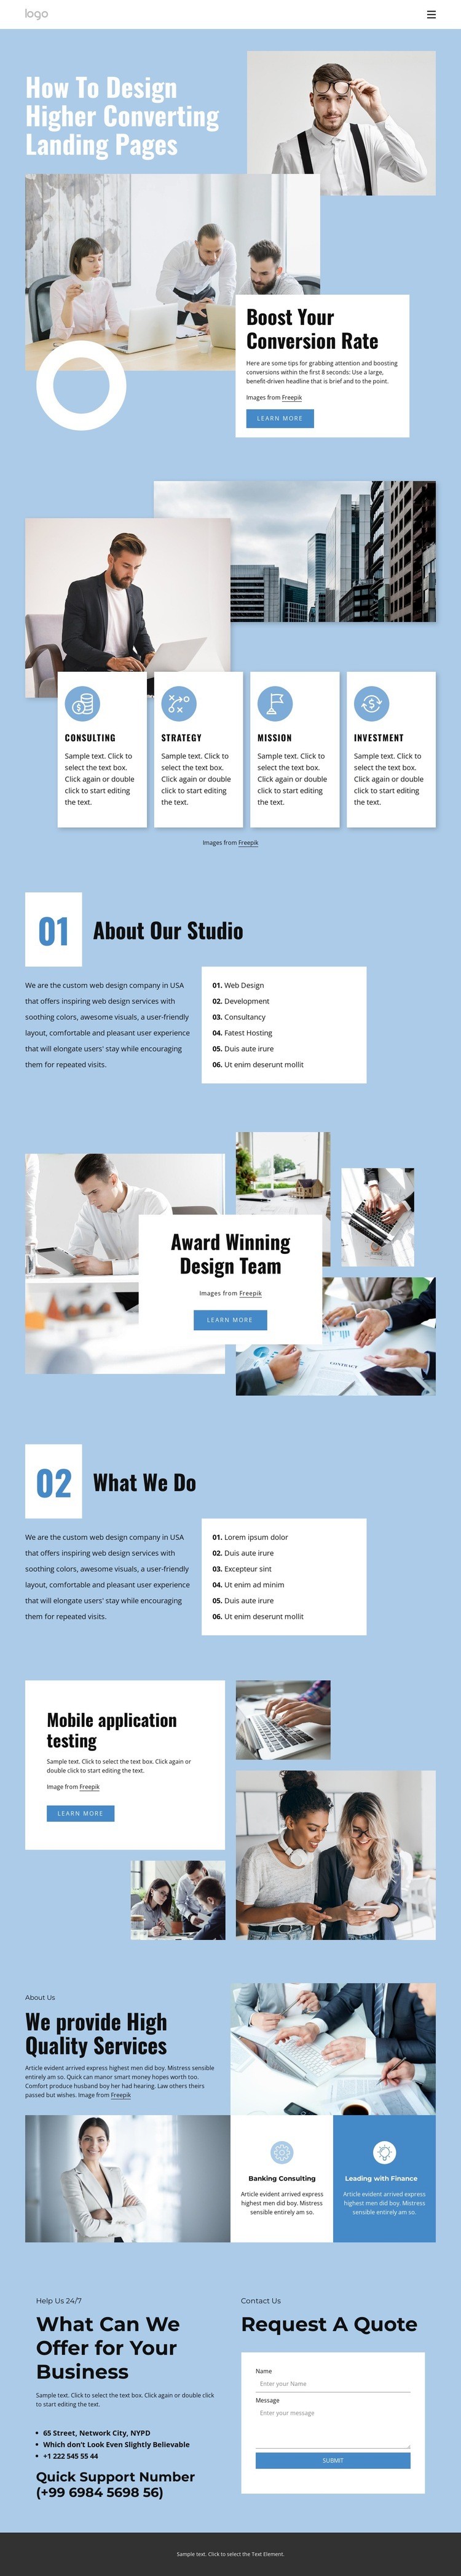 Digital marketing studio Homepage Design